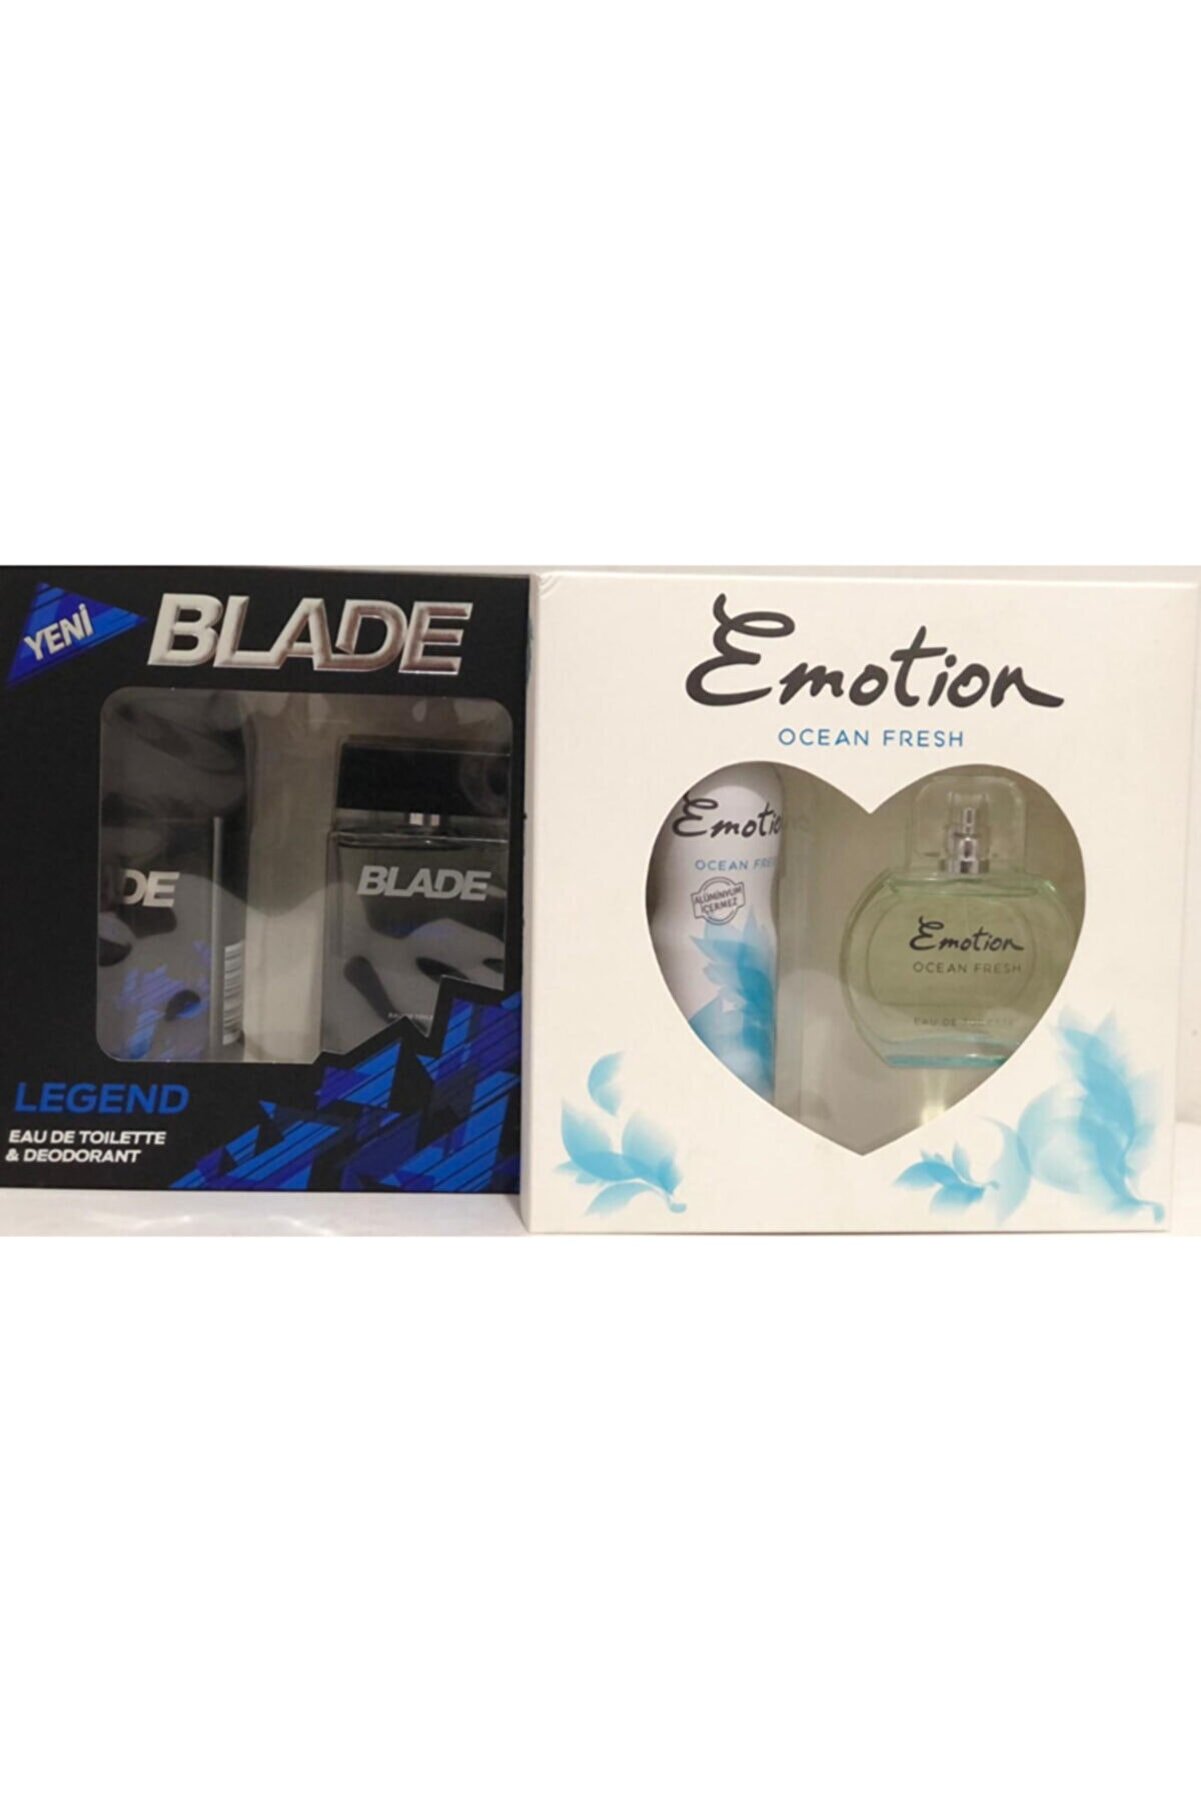 Blade Legend Parfüm Seti Alana Emotion Ocean Fresh Parfüm Seti Hediye